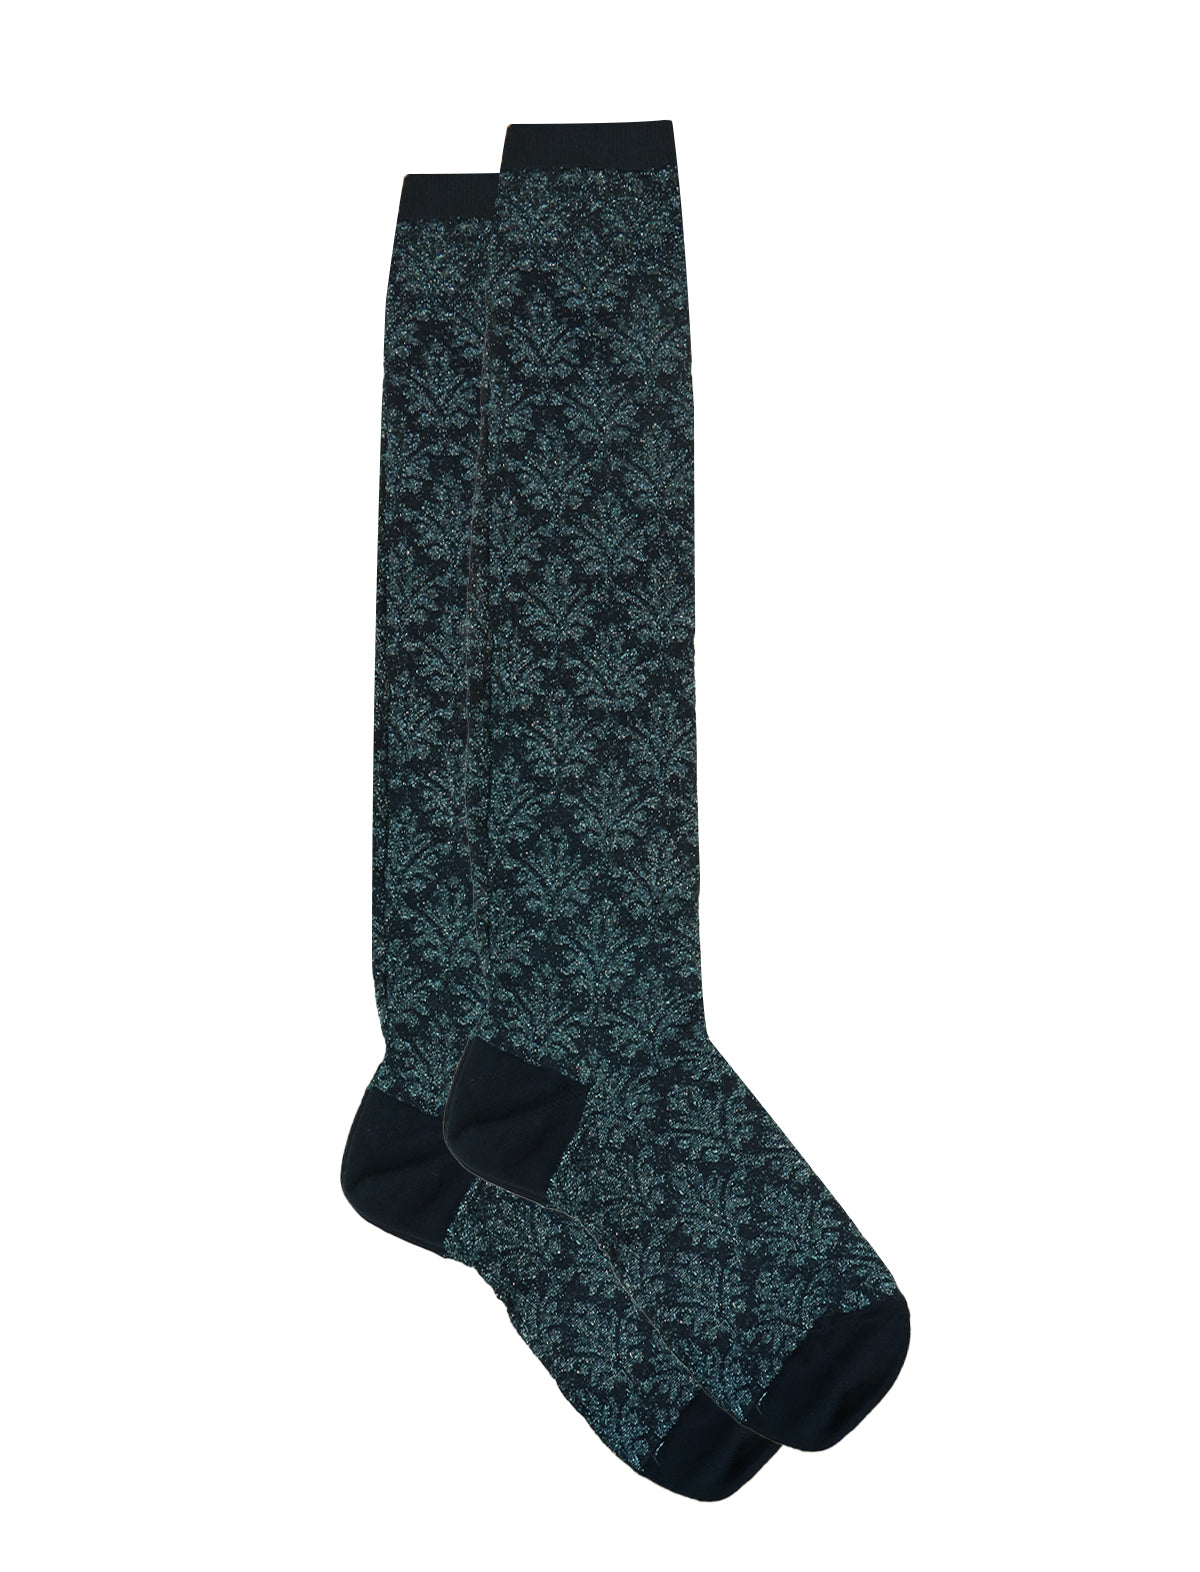 Gallo Long Socks in Blue Octremare Print